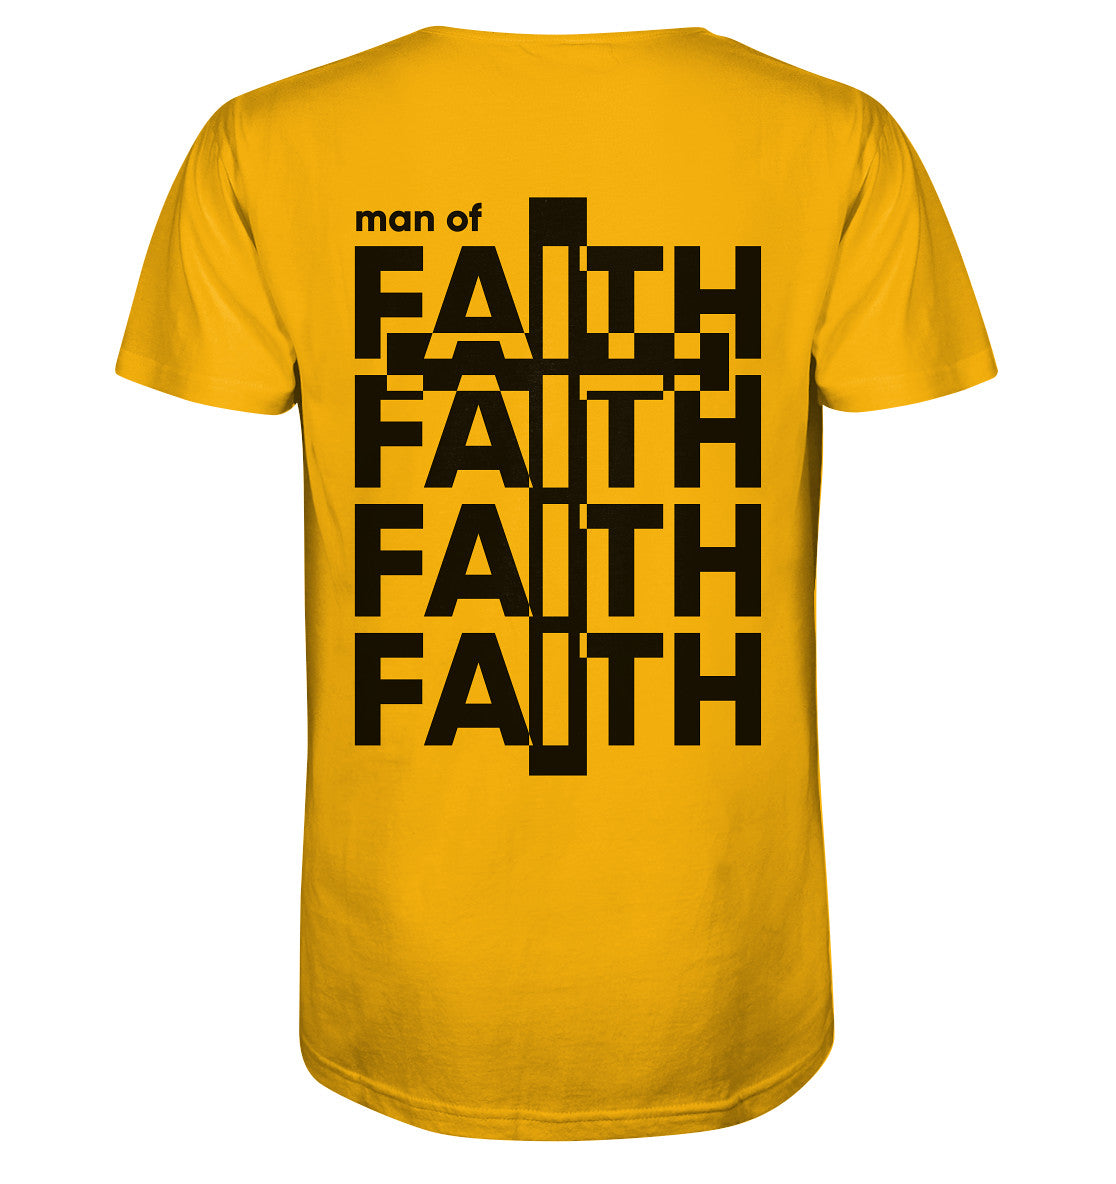 Man of FAITH - Organic Shirt